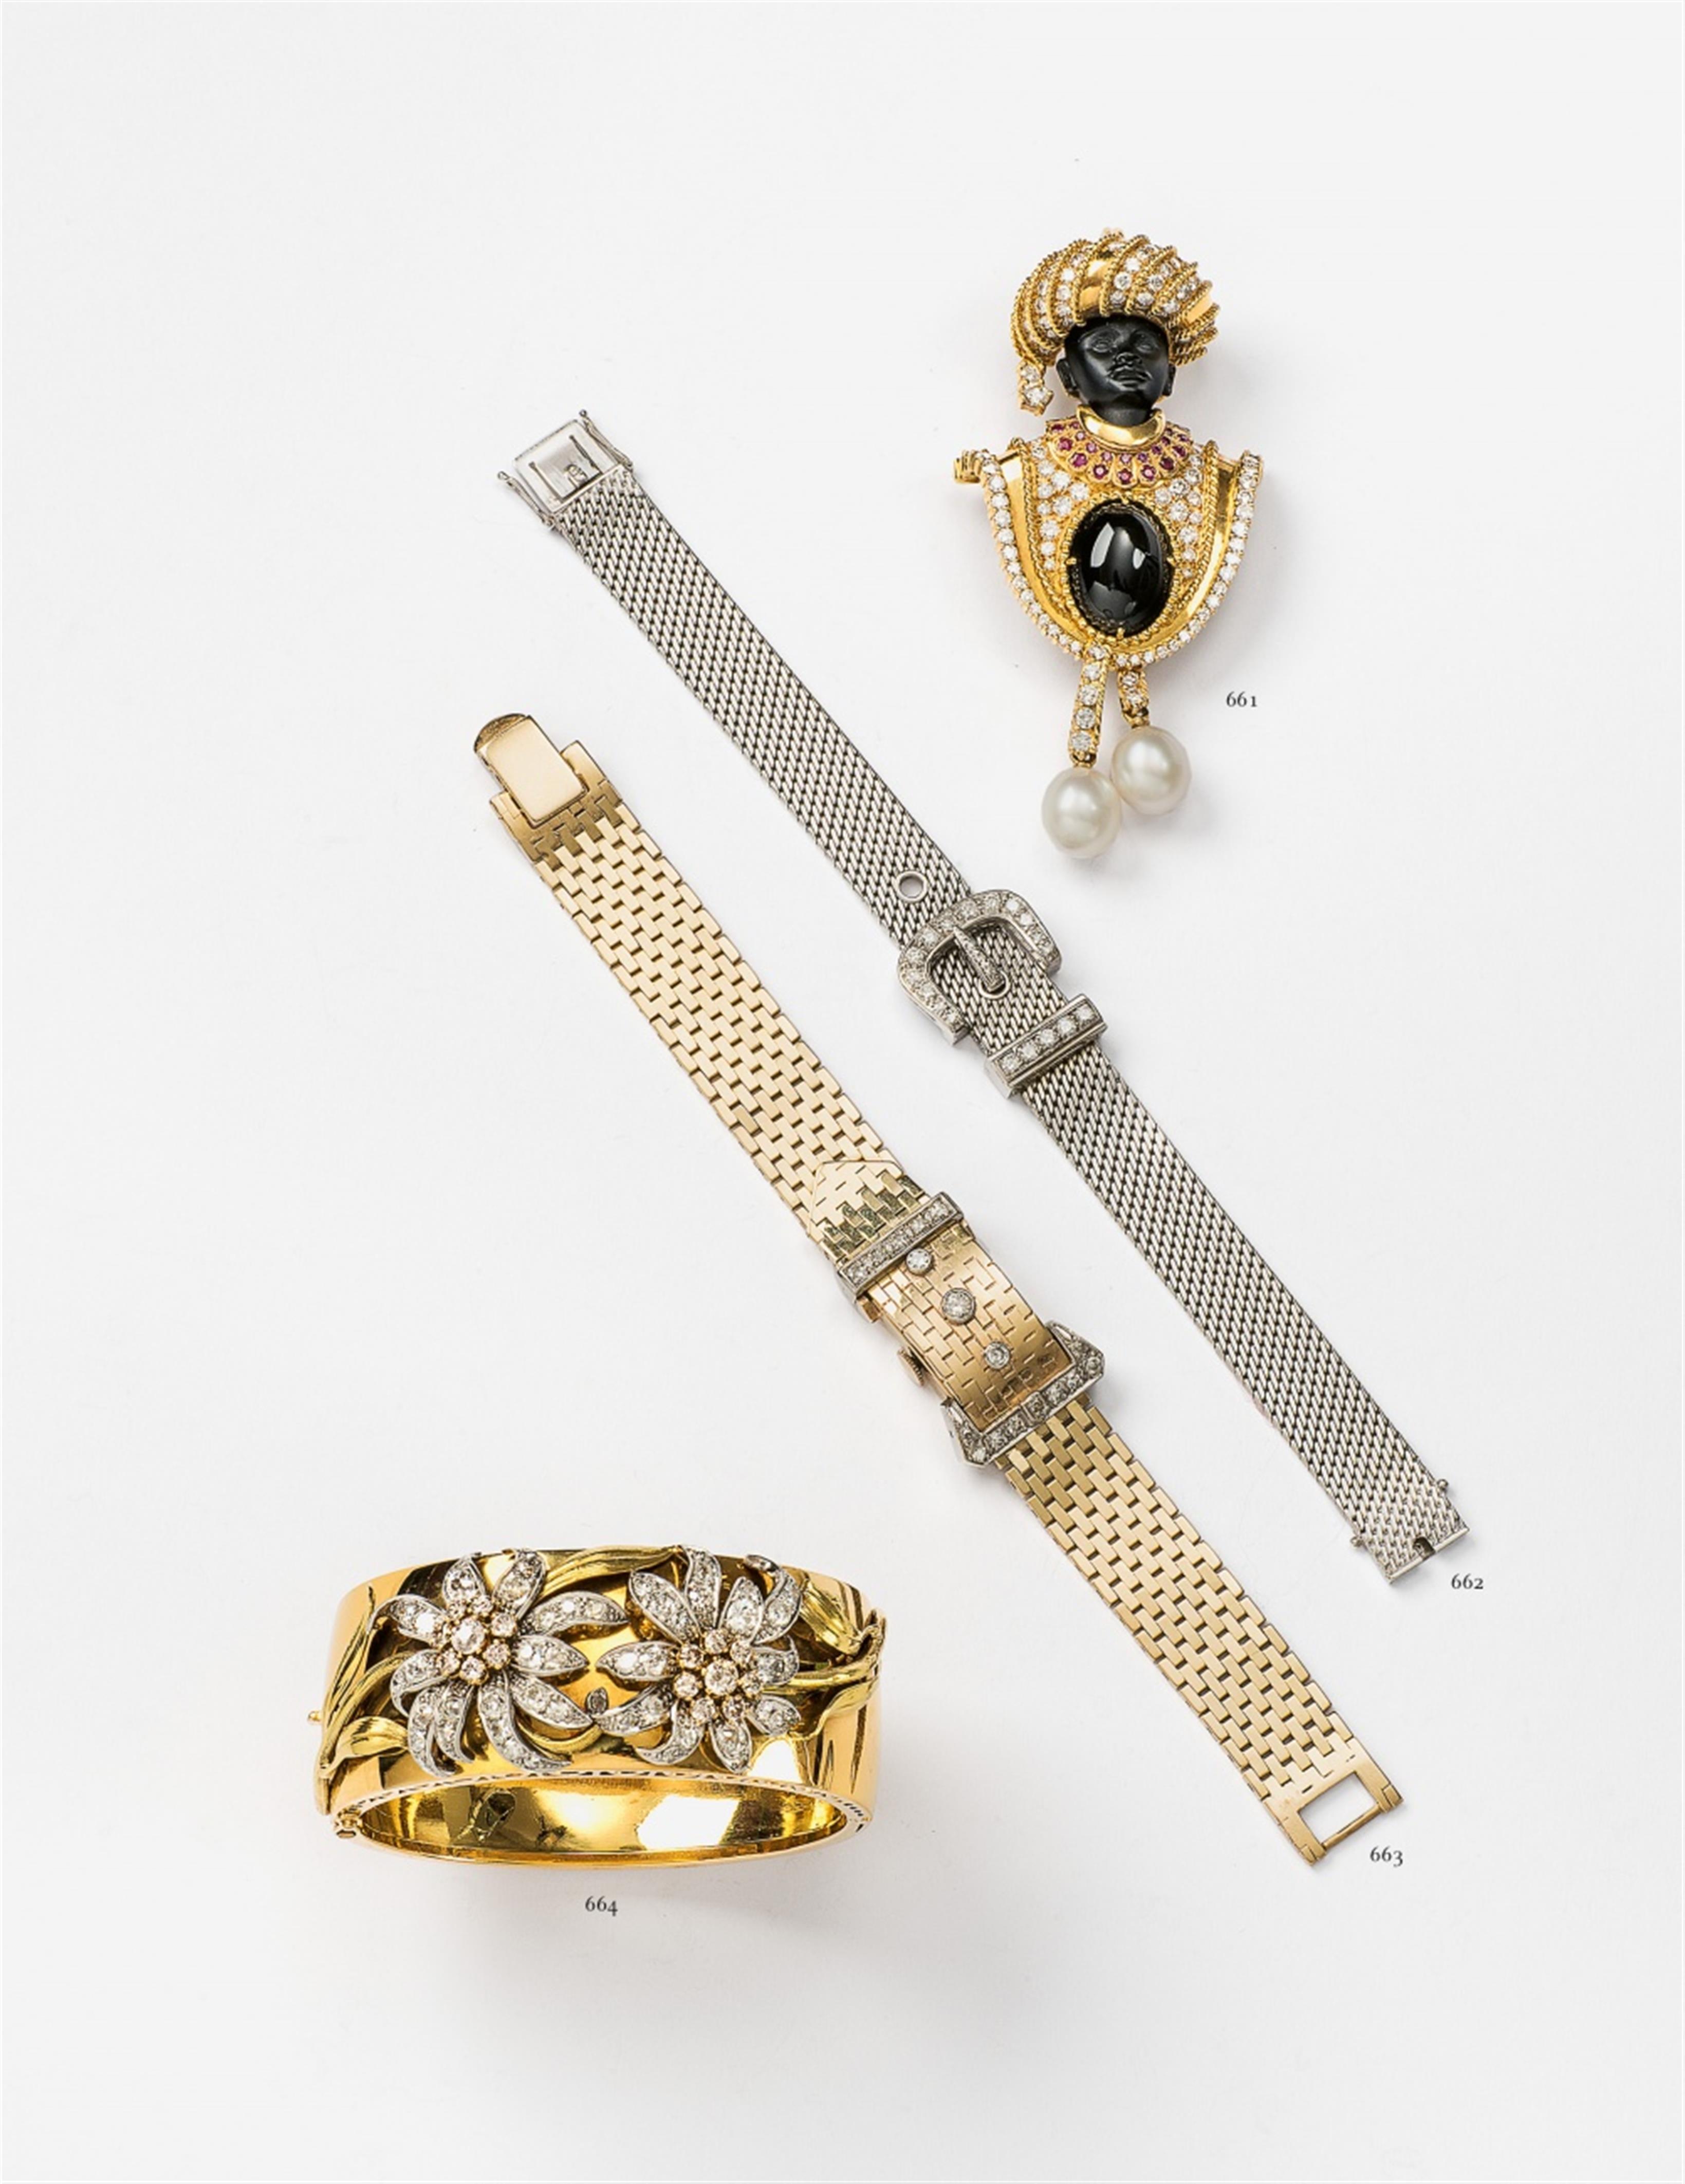 An 18k white gold bracelet with a belt buckle motif - image-2